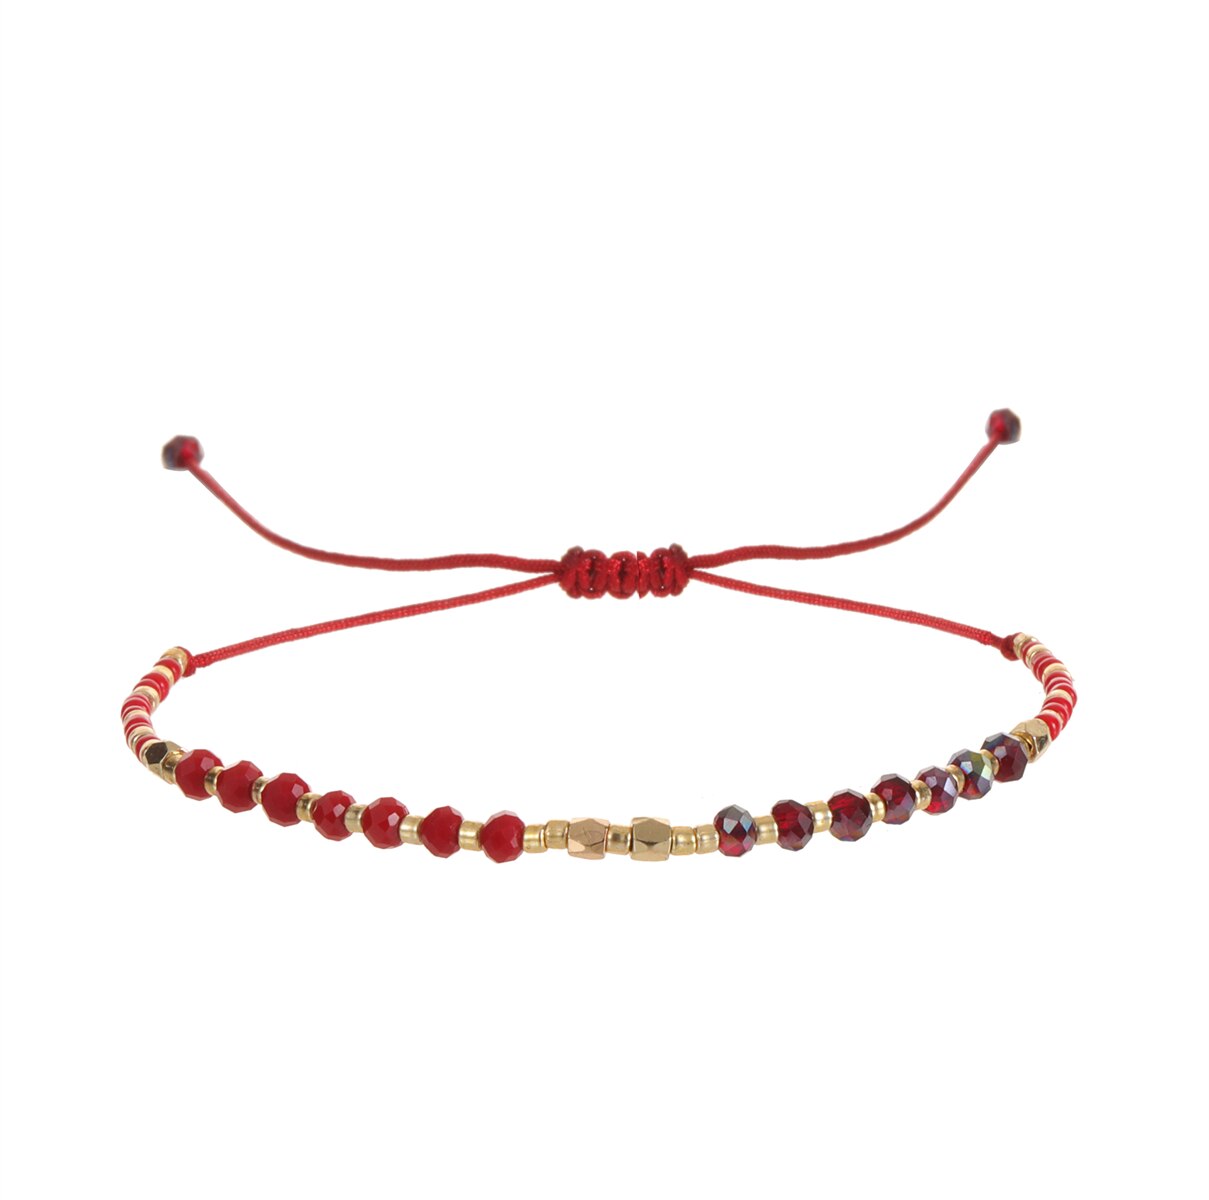 Fashion Glass Crystal Beaded Bracelets for Women Men Bracelet Beads Anklet Wrist Strap Ankle Jewelry Gift